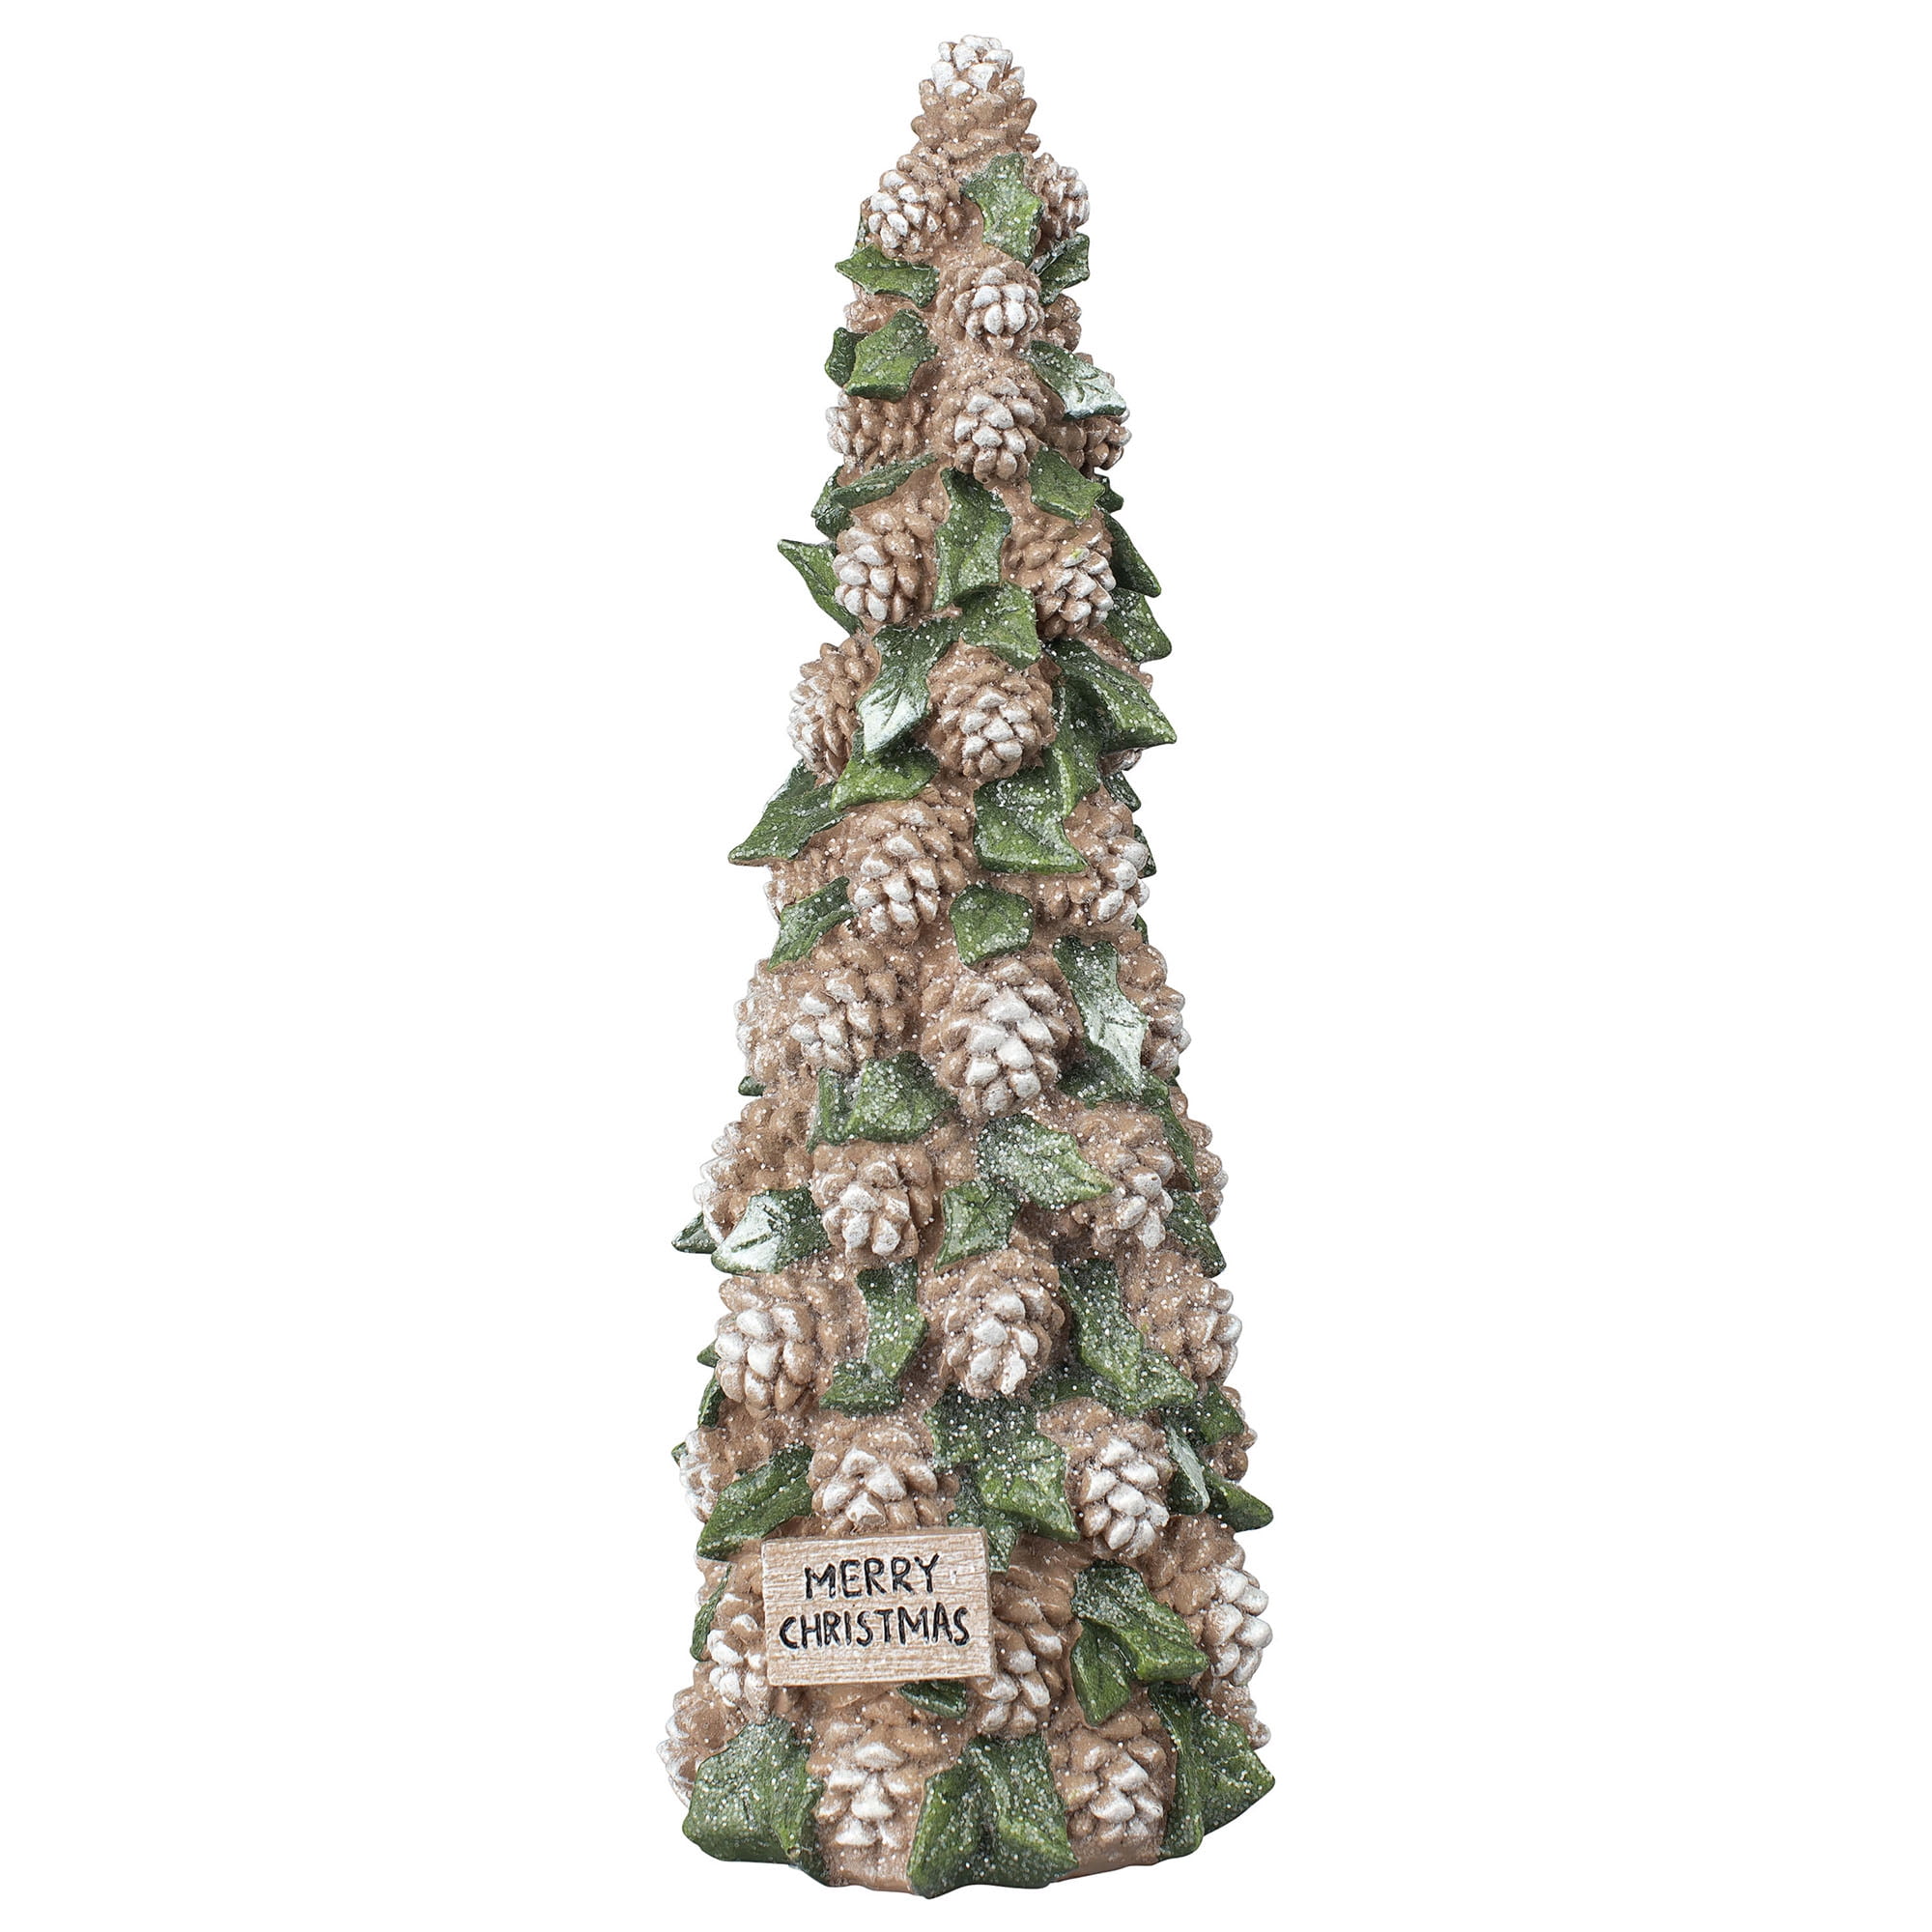 Giant Jumbo Pine Cones, Eco Home Decor, Large Pinecone, Organic Pinecones,  Craft Supplies, Diy Tools, Natural Table Display, Christmas Decor 